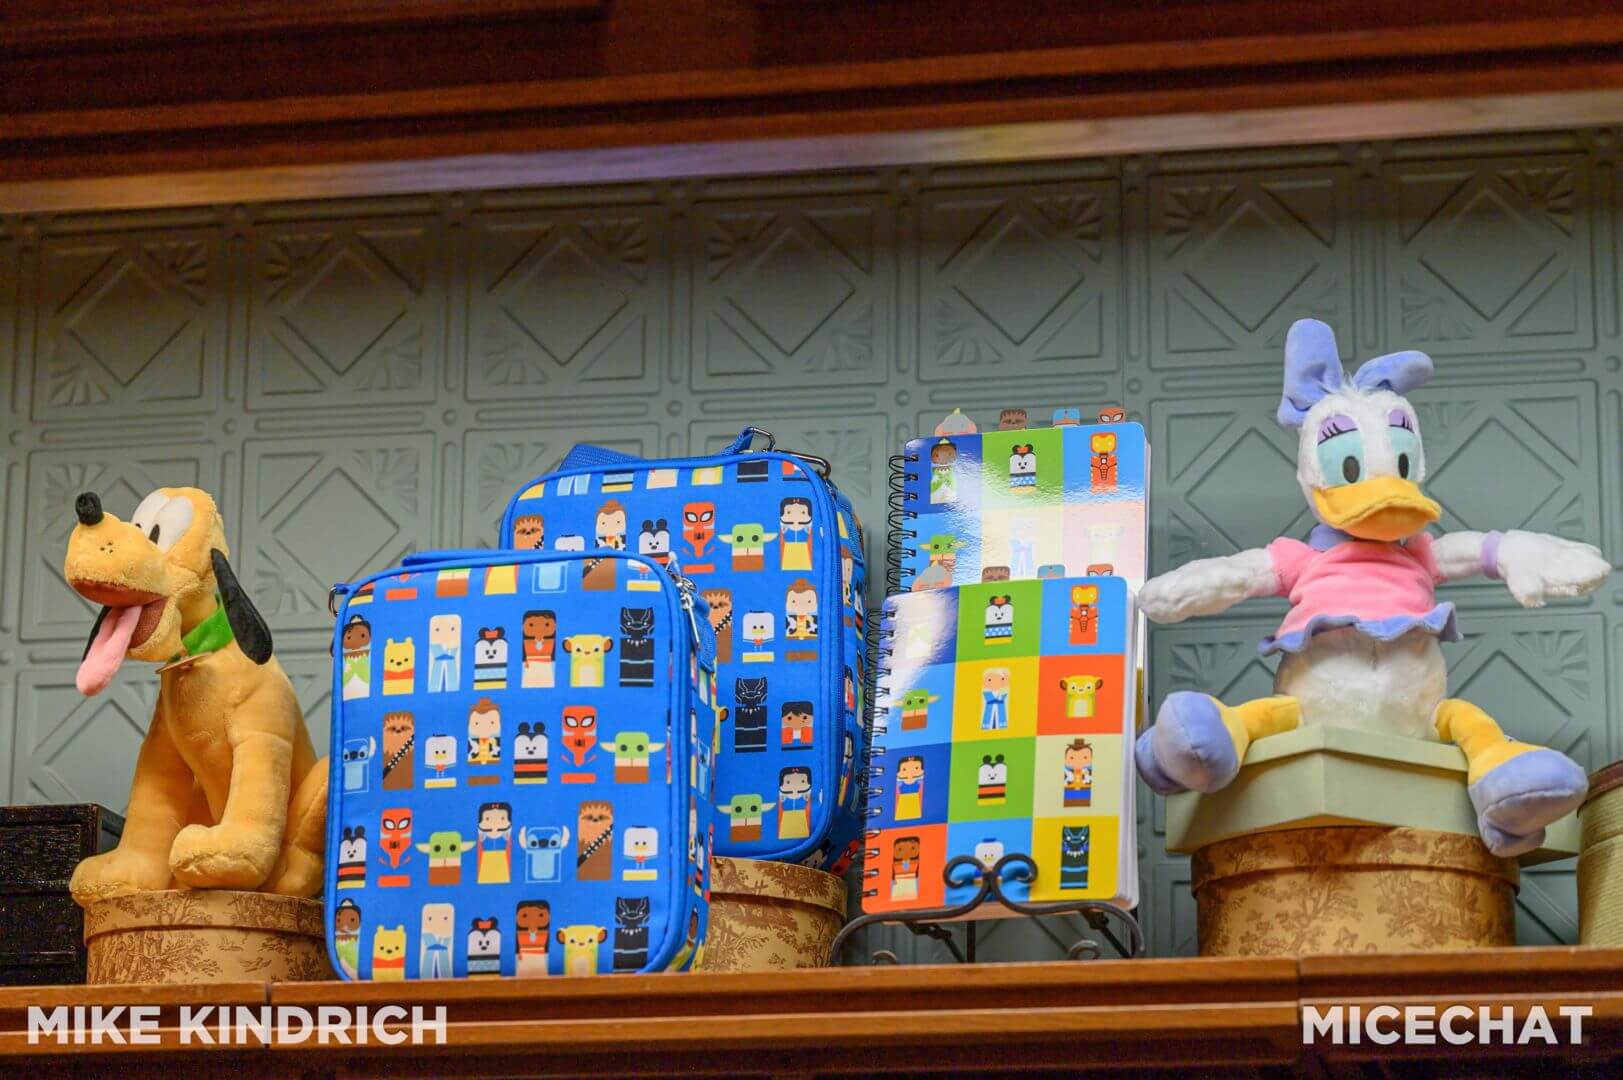 Disney100 Merchandise, More Disney100 Merchandise Hits The Shelves at Disneyland!